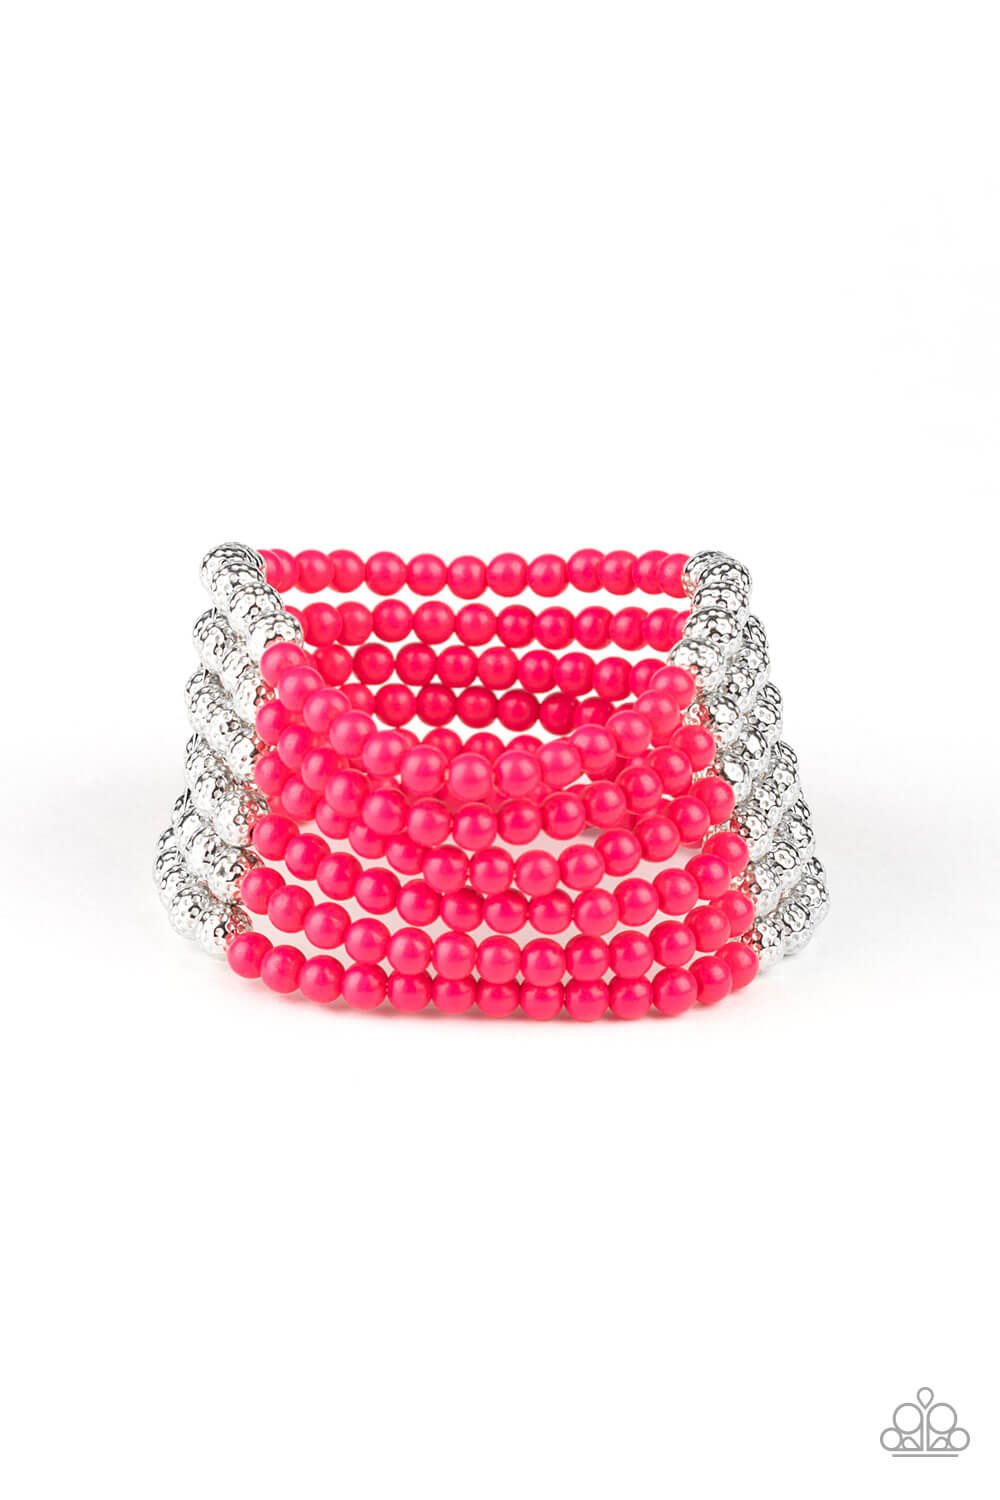 LAYER It On Thick - Pink Bracelet - Princess Glam Shop